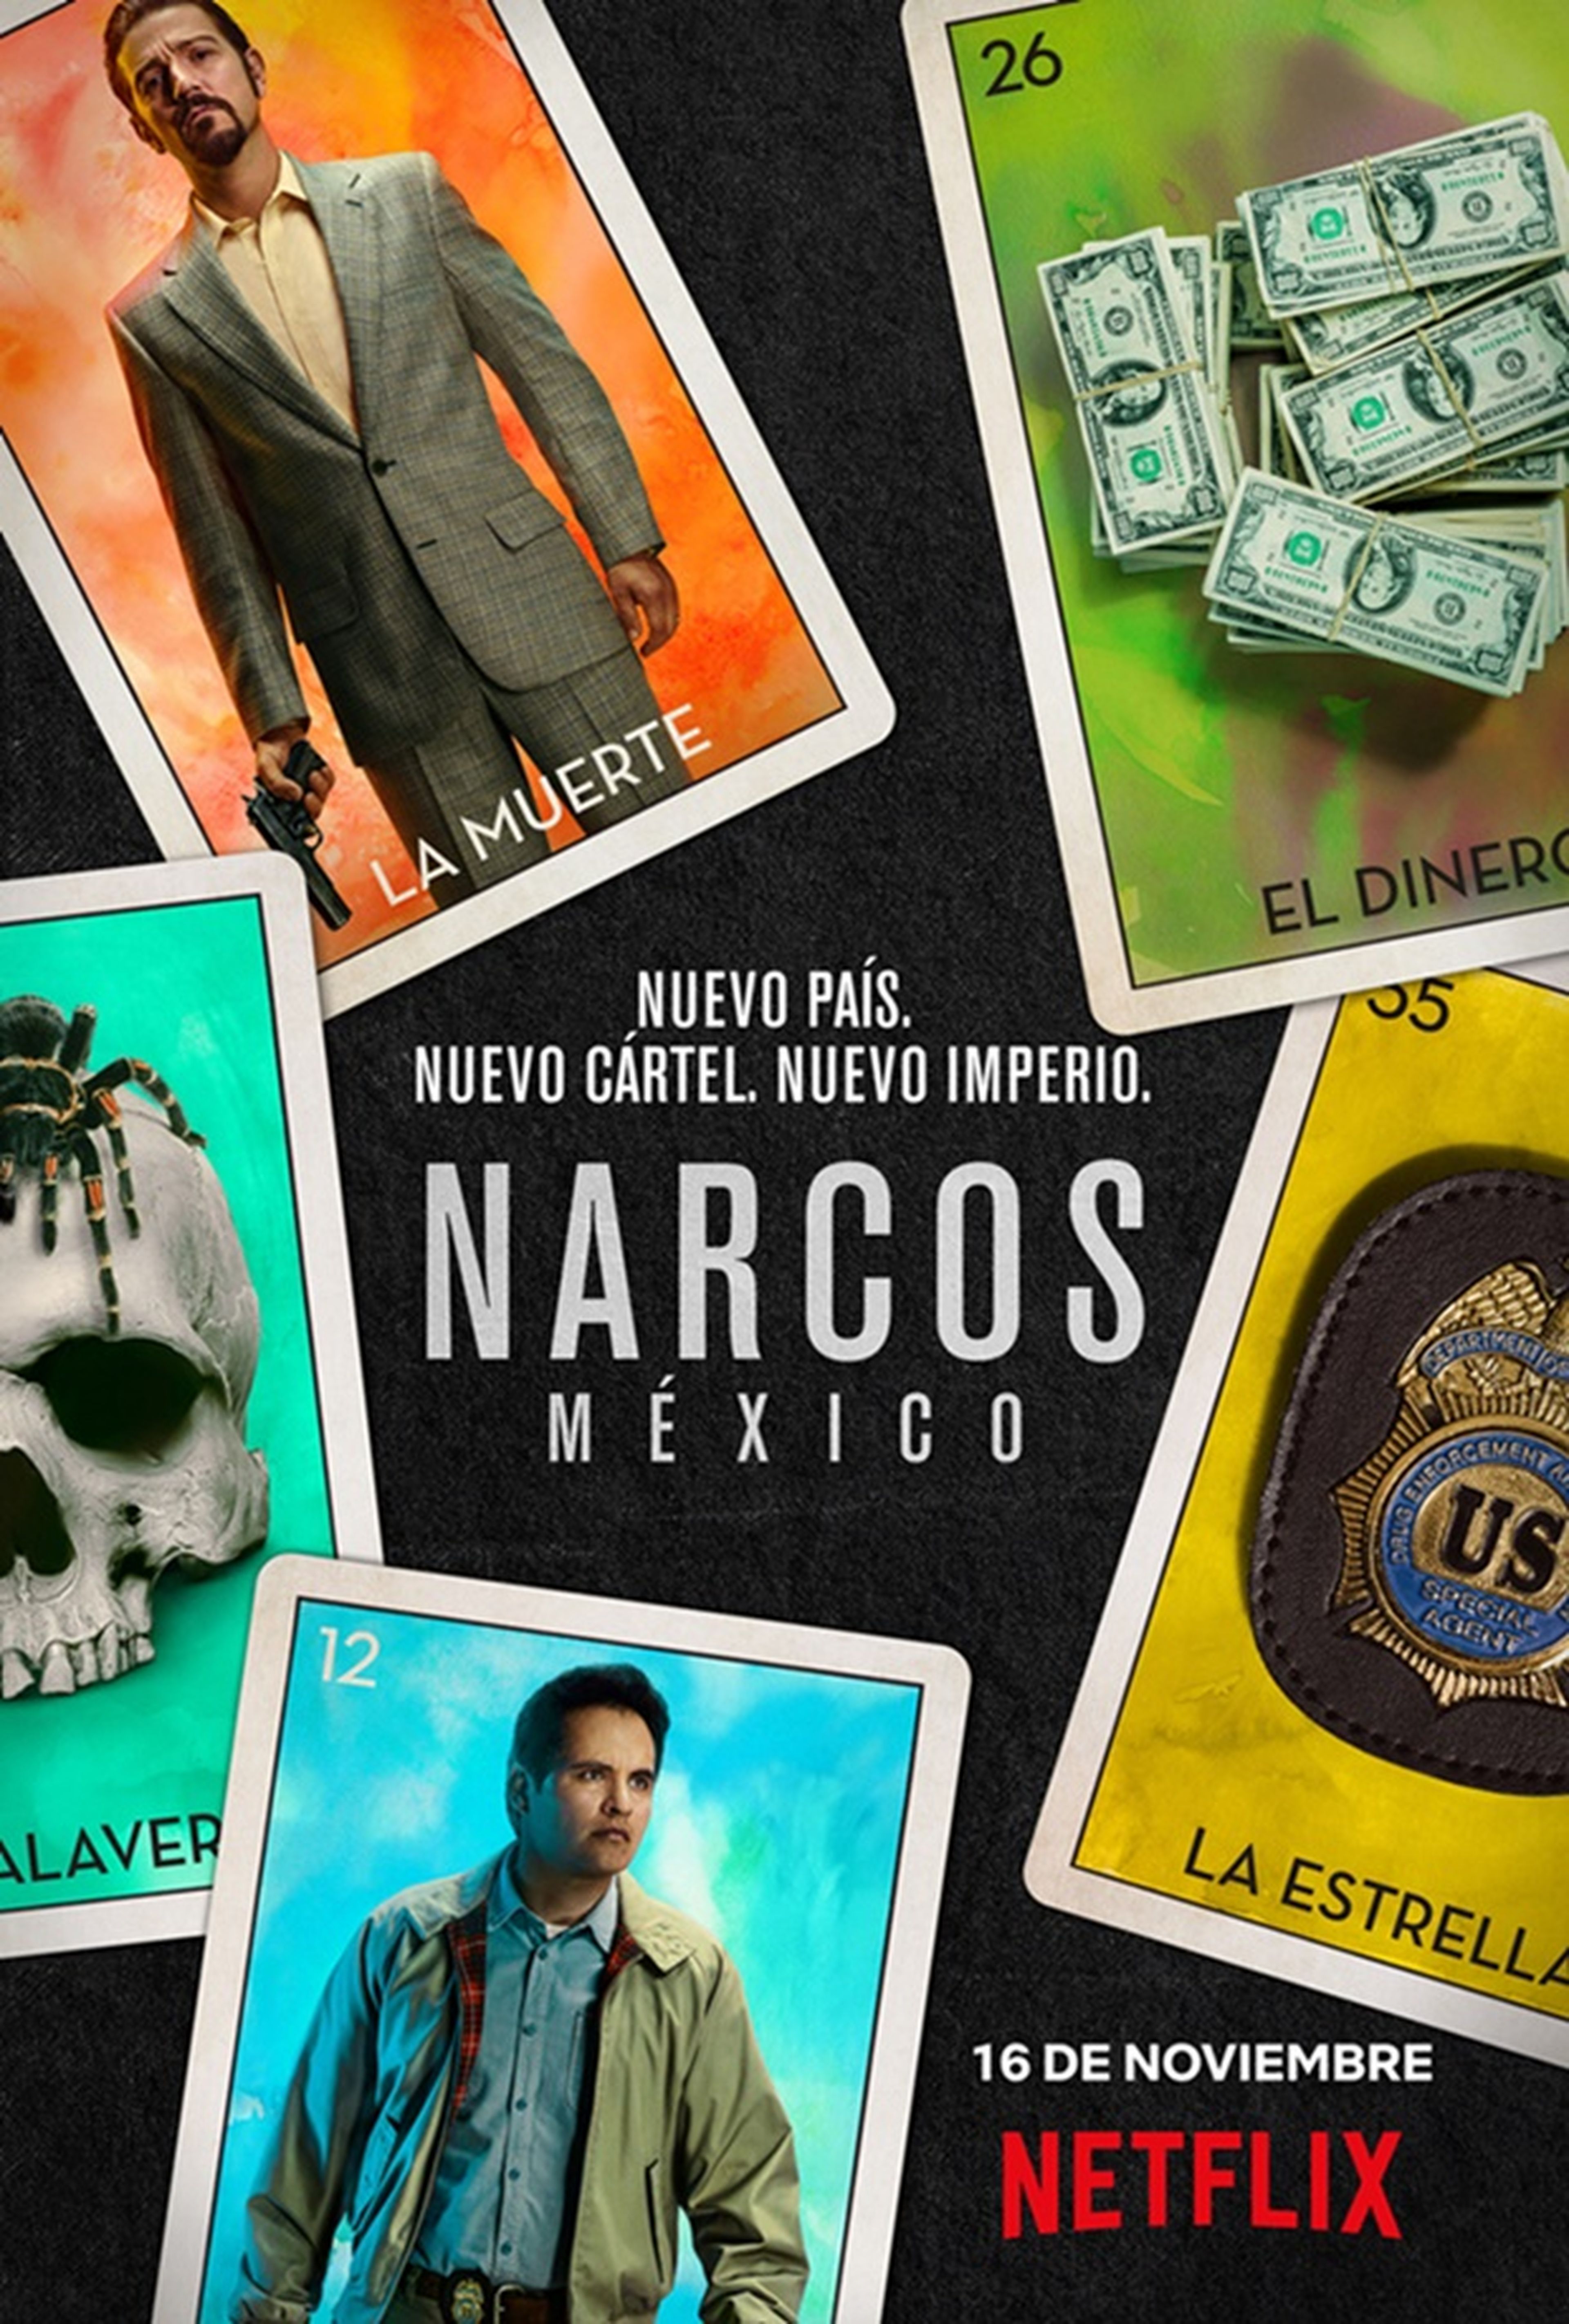 Nuevo póster promocional de Narcos: México